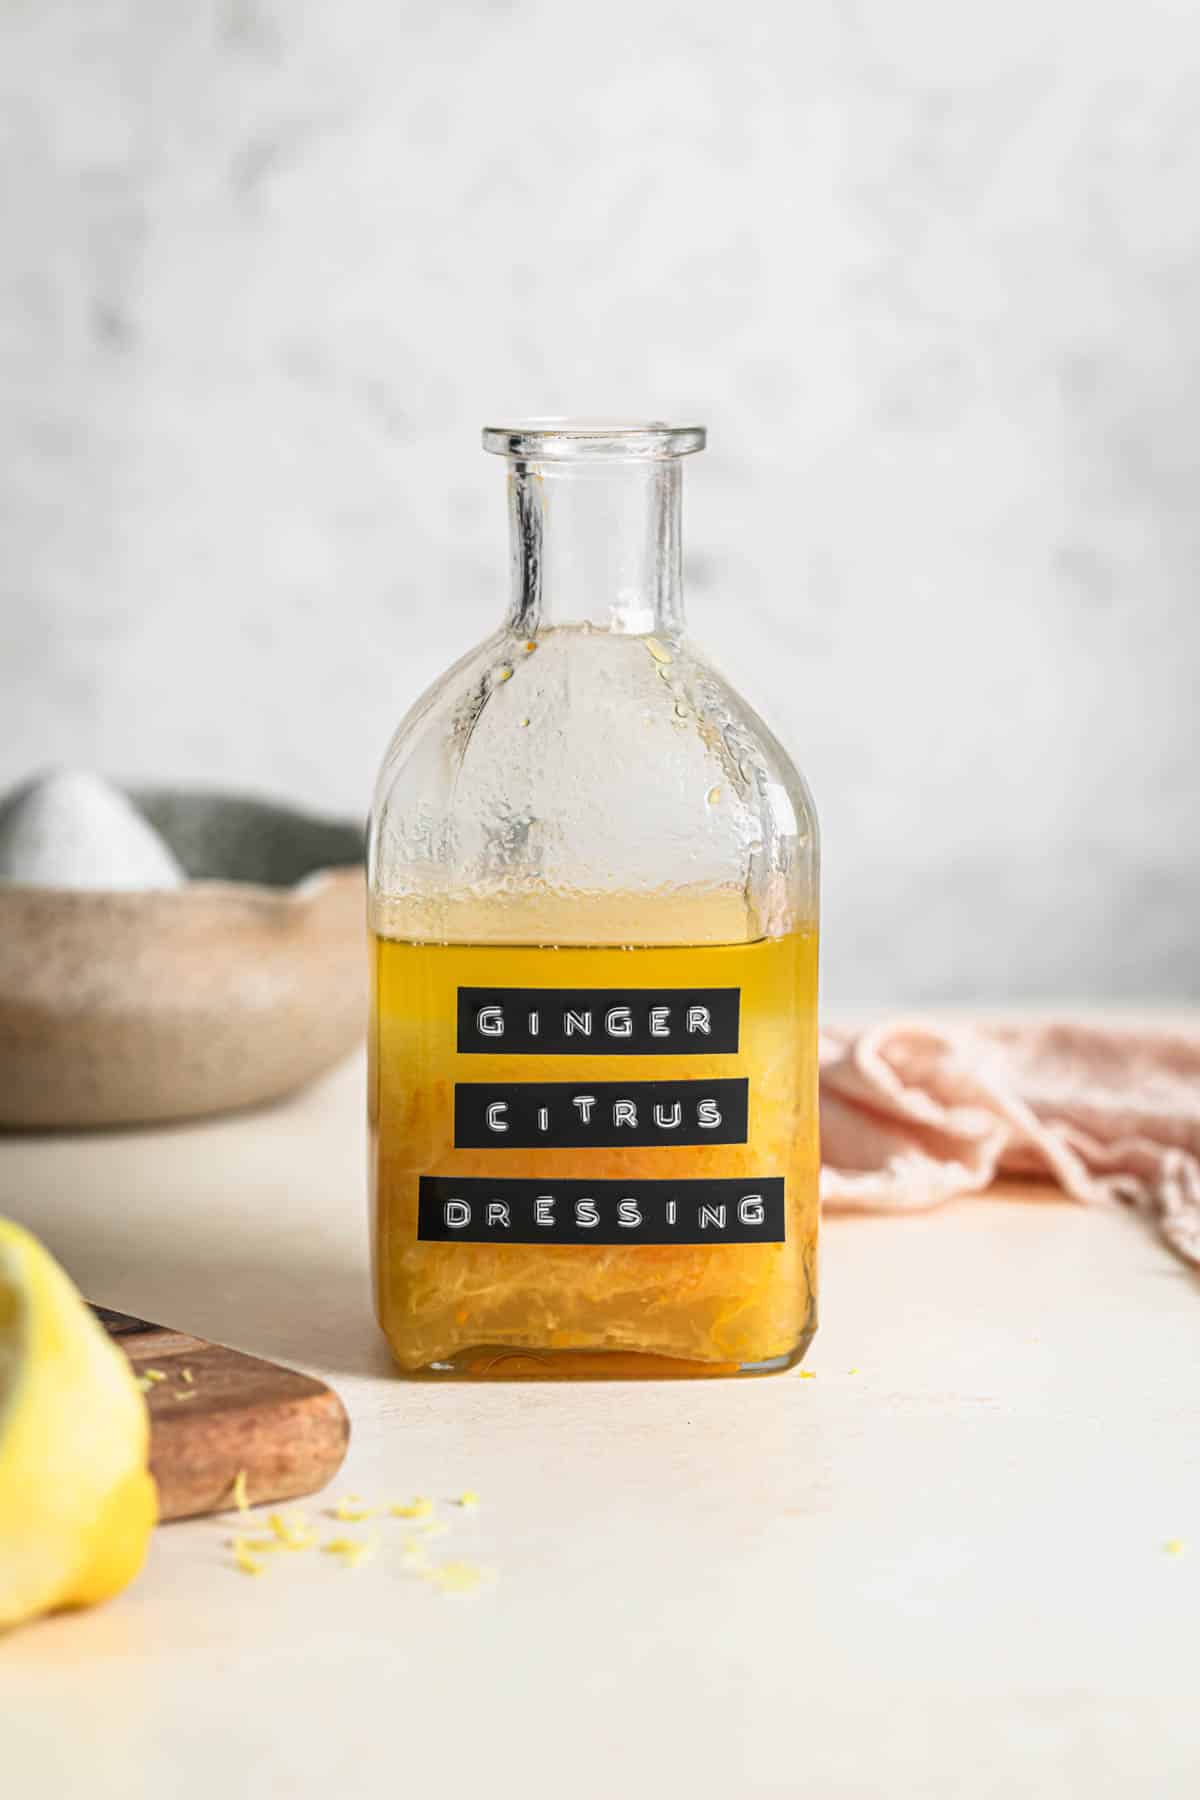 Ginger citrus dressing in a glass jar, labelled "Ginger Citrus Dressing".